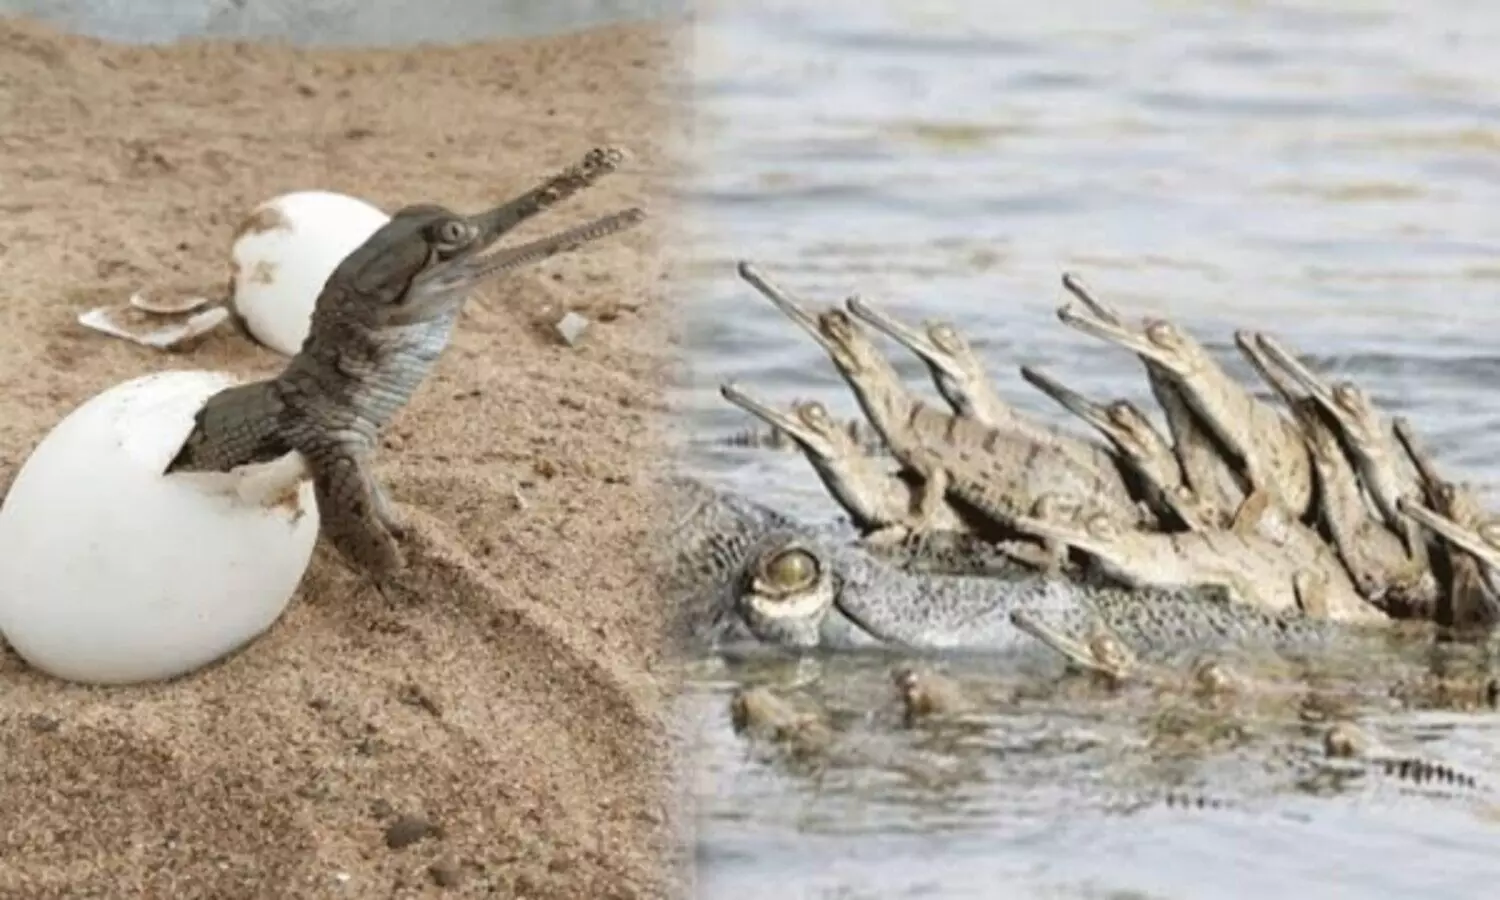 Nesting of alligators and crocodiles